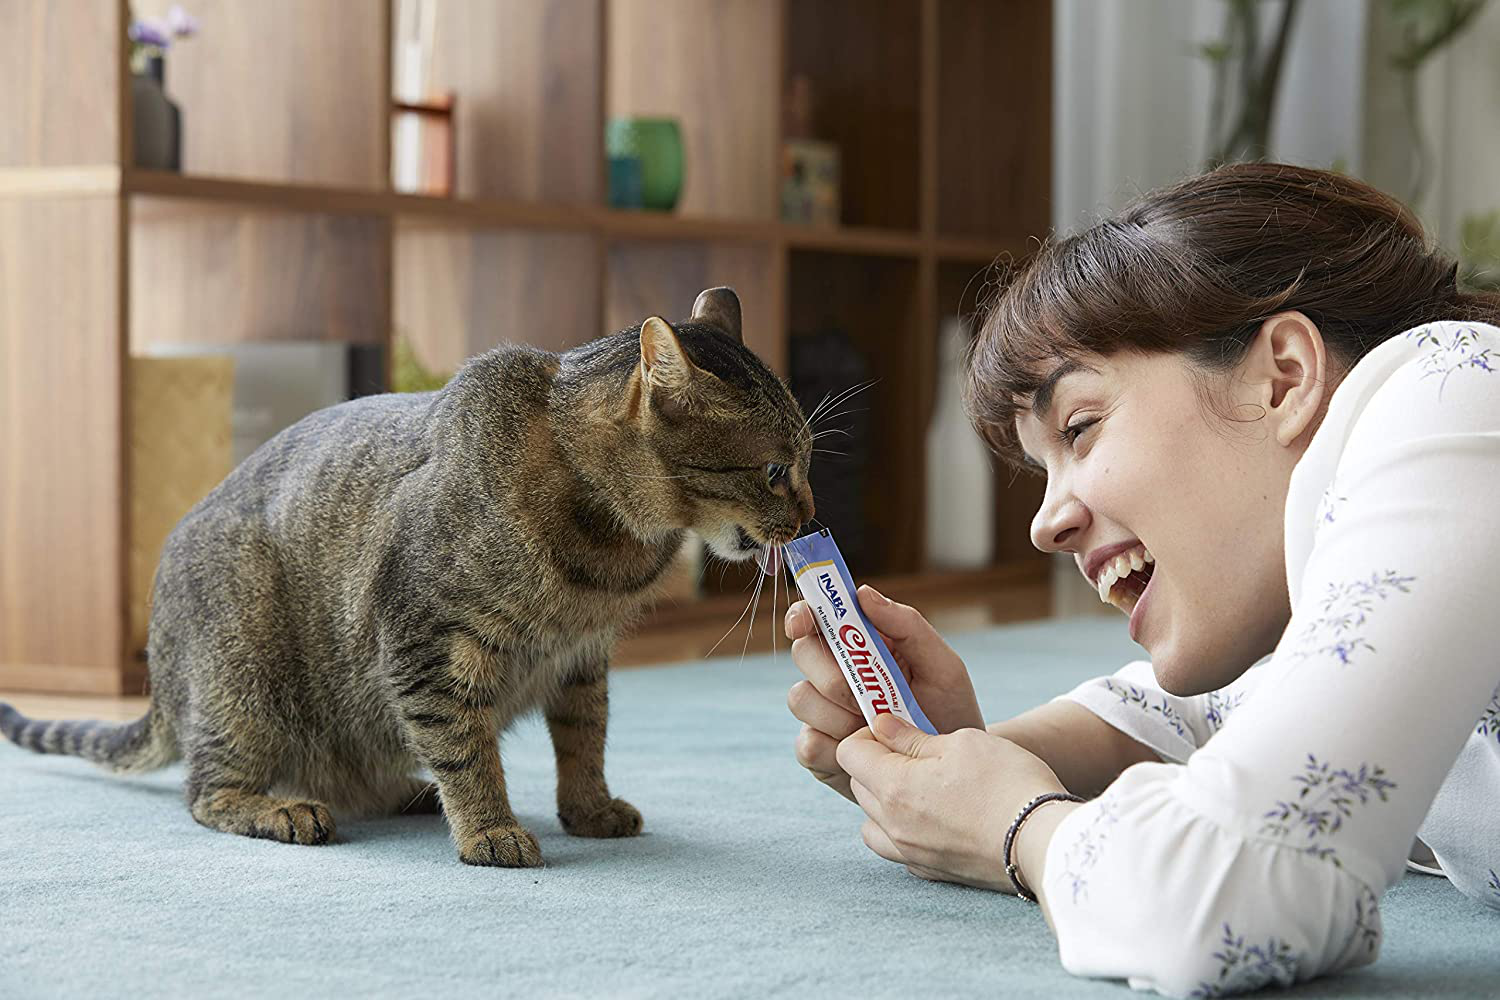 INABA Churu Lickable Purée Natural Cat Treats (Tuna with Scallop Recipe, 4 Tubes) Animals & Pet Supplies > Pet Supplies > Cat Supplies > Cat Treats INABA   